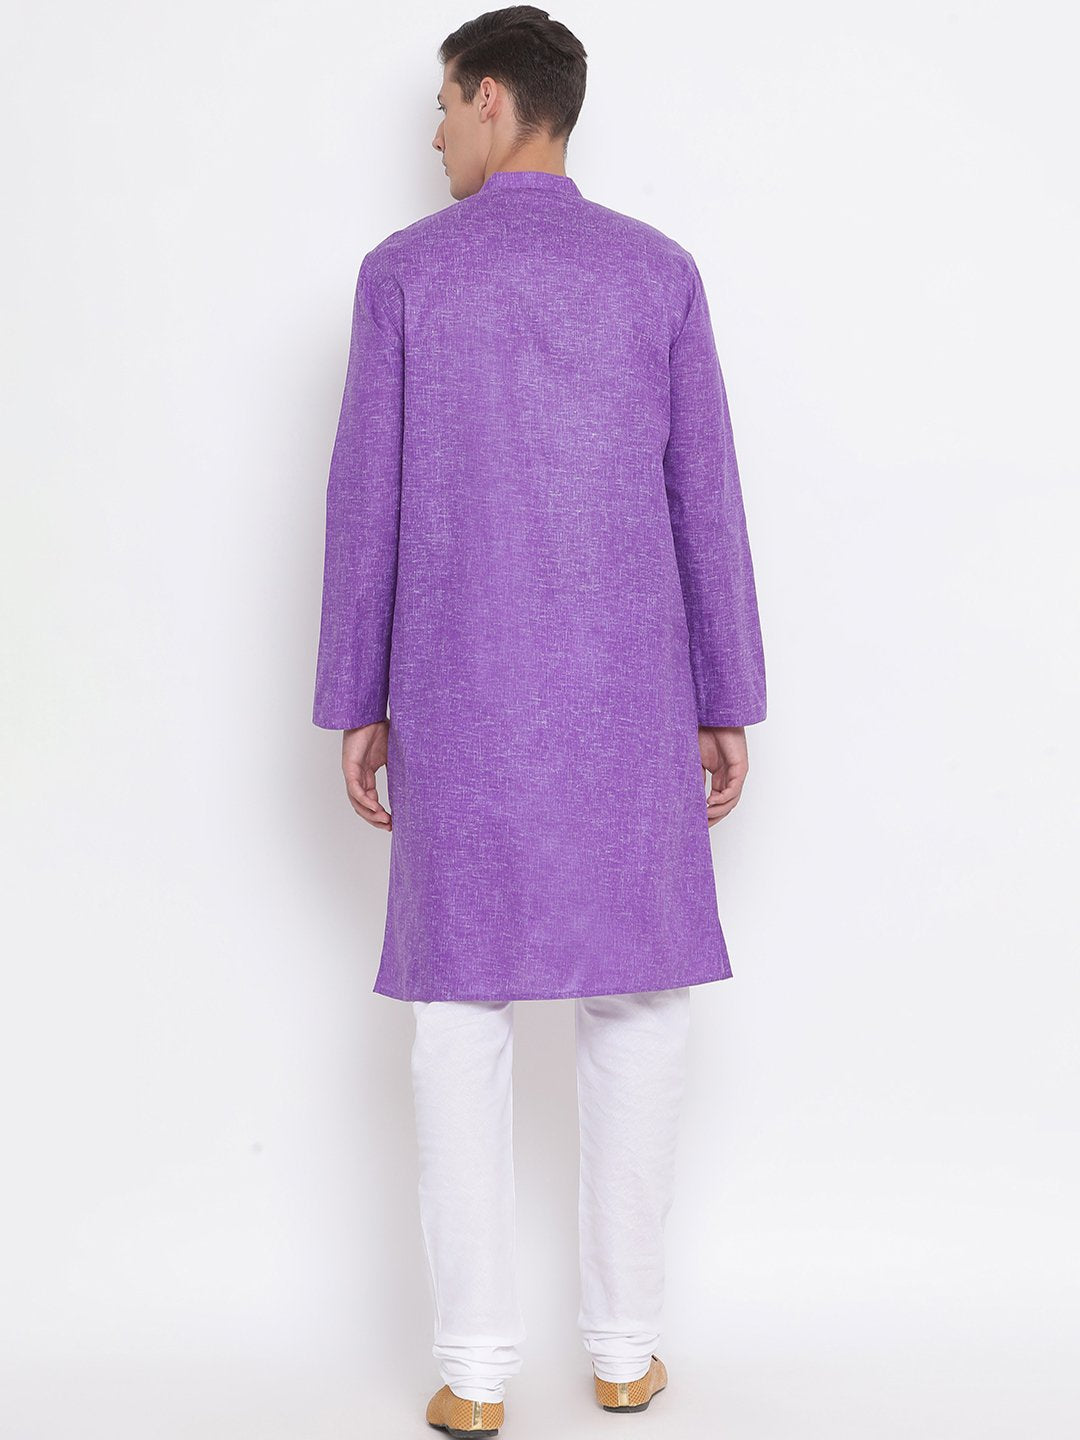 Men's Purple Mix Cotton Kurta and Pyjama Set - Vastramay